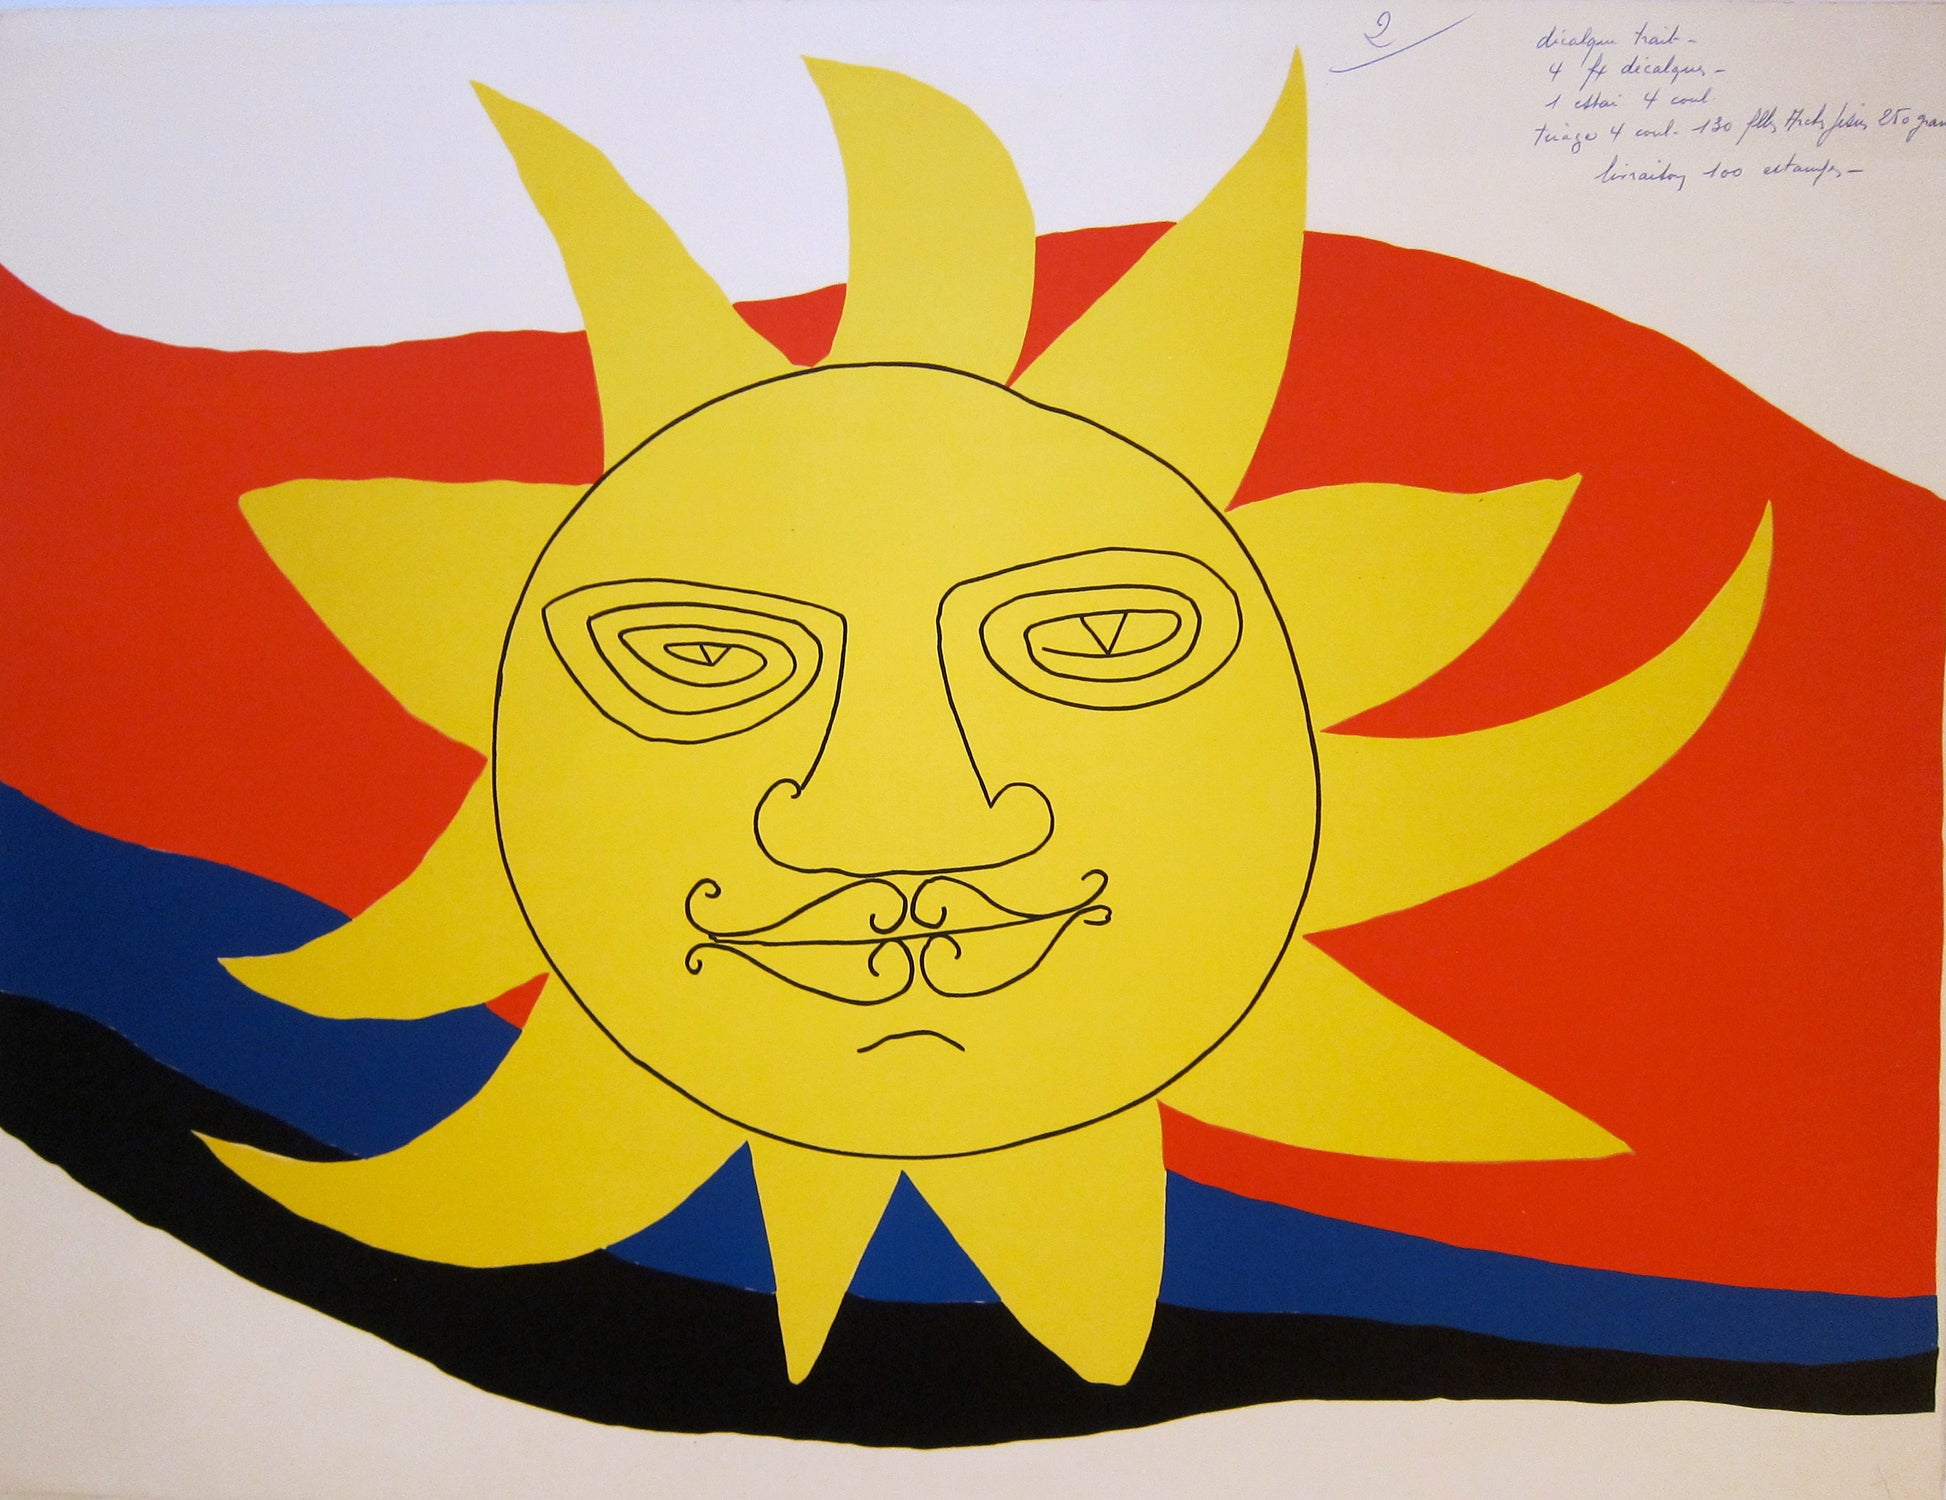 Sun Face by Alexander Calder - Mourlot Editions - Fine_Art - Poster - Lithograph - Wall Art - Vintage - Prints - Original